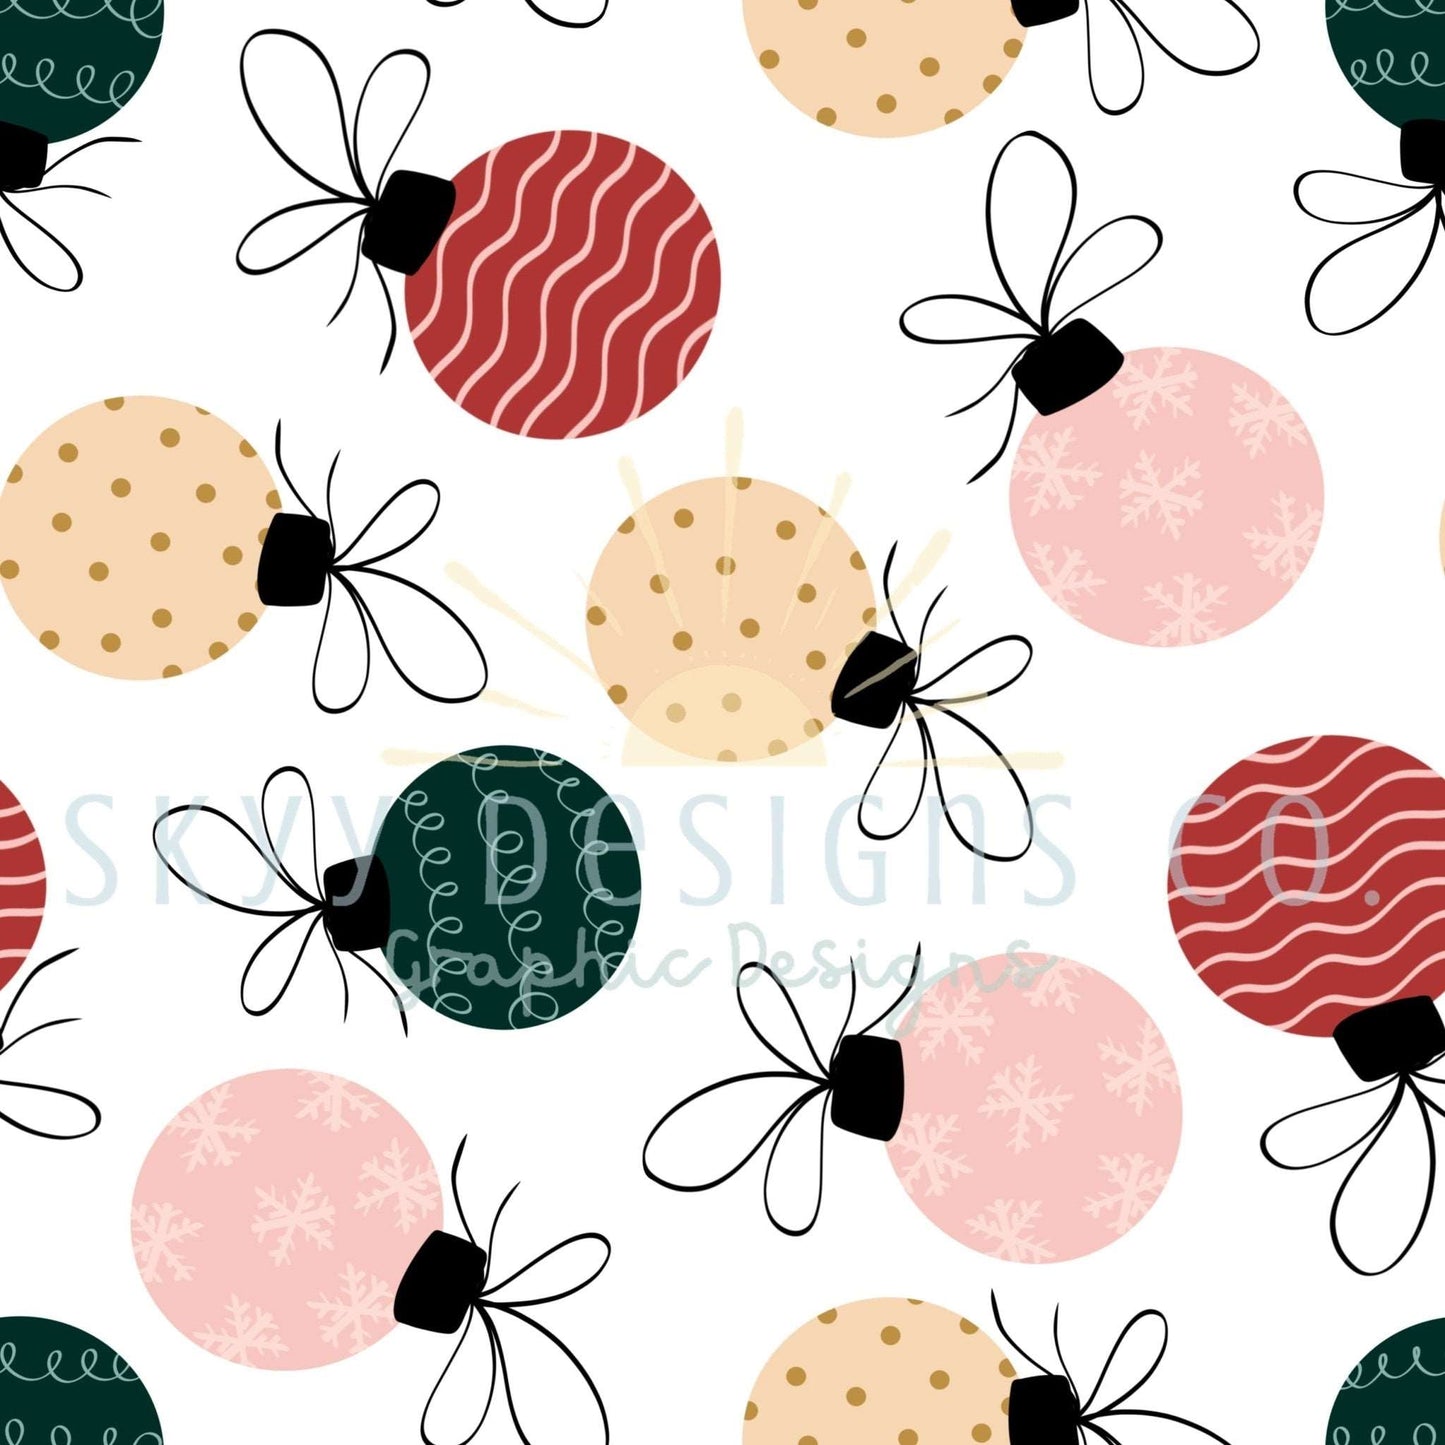 Christmas ornaments seamless pattern - SkyyDesignsCo | Seamless Pattern Designs